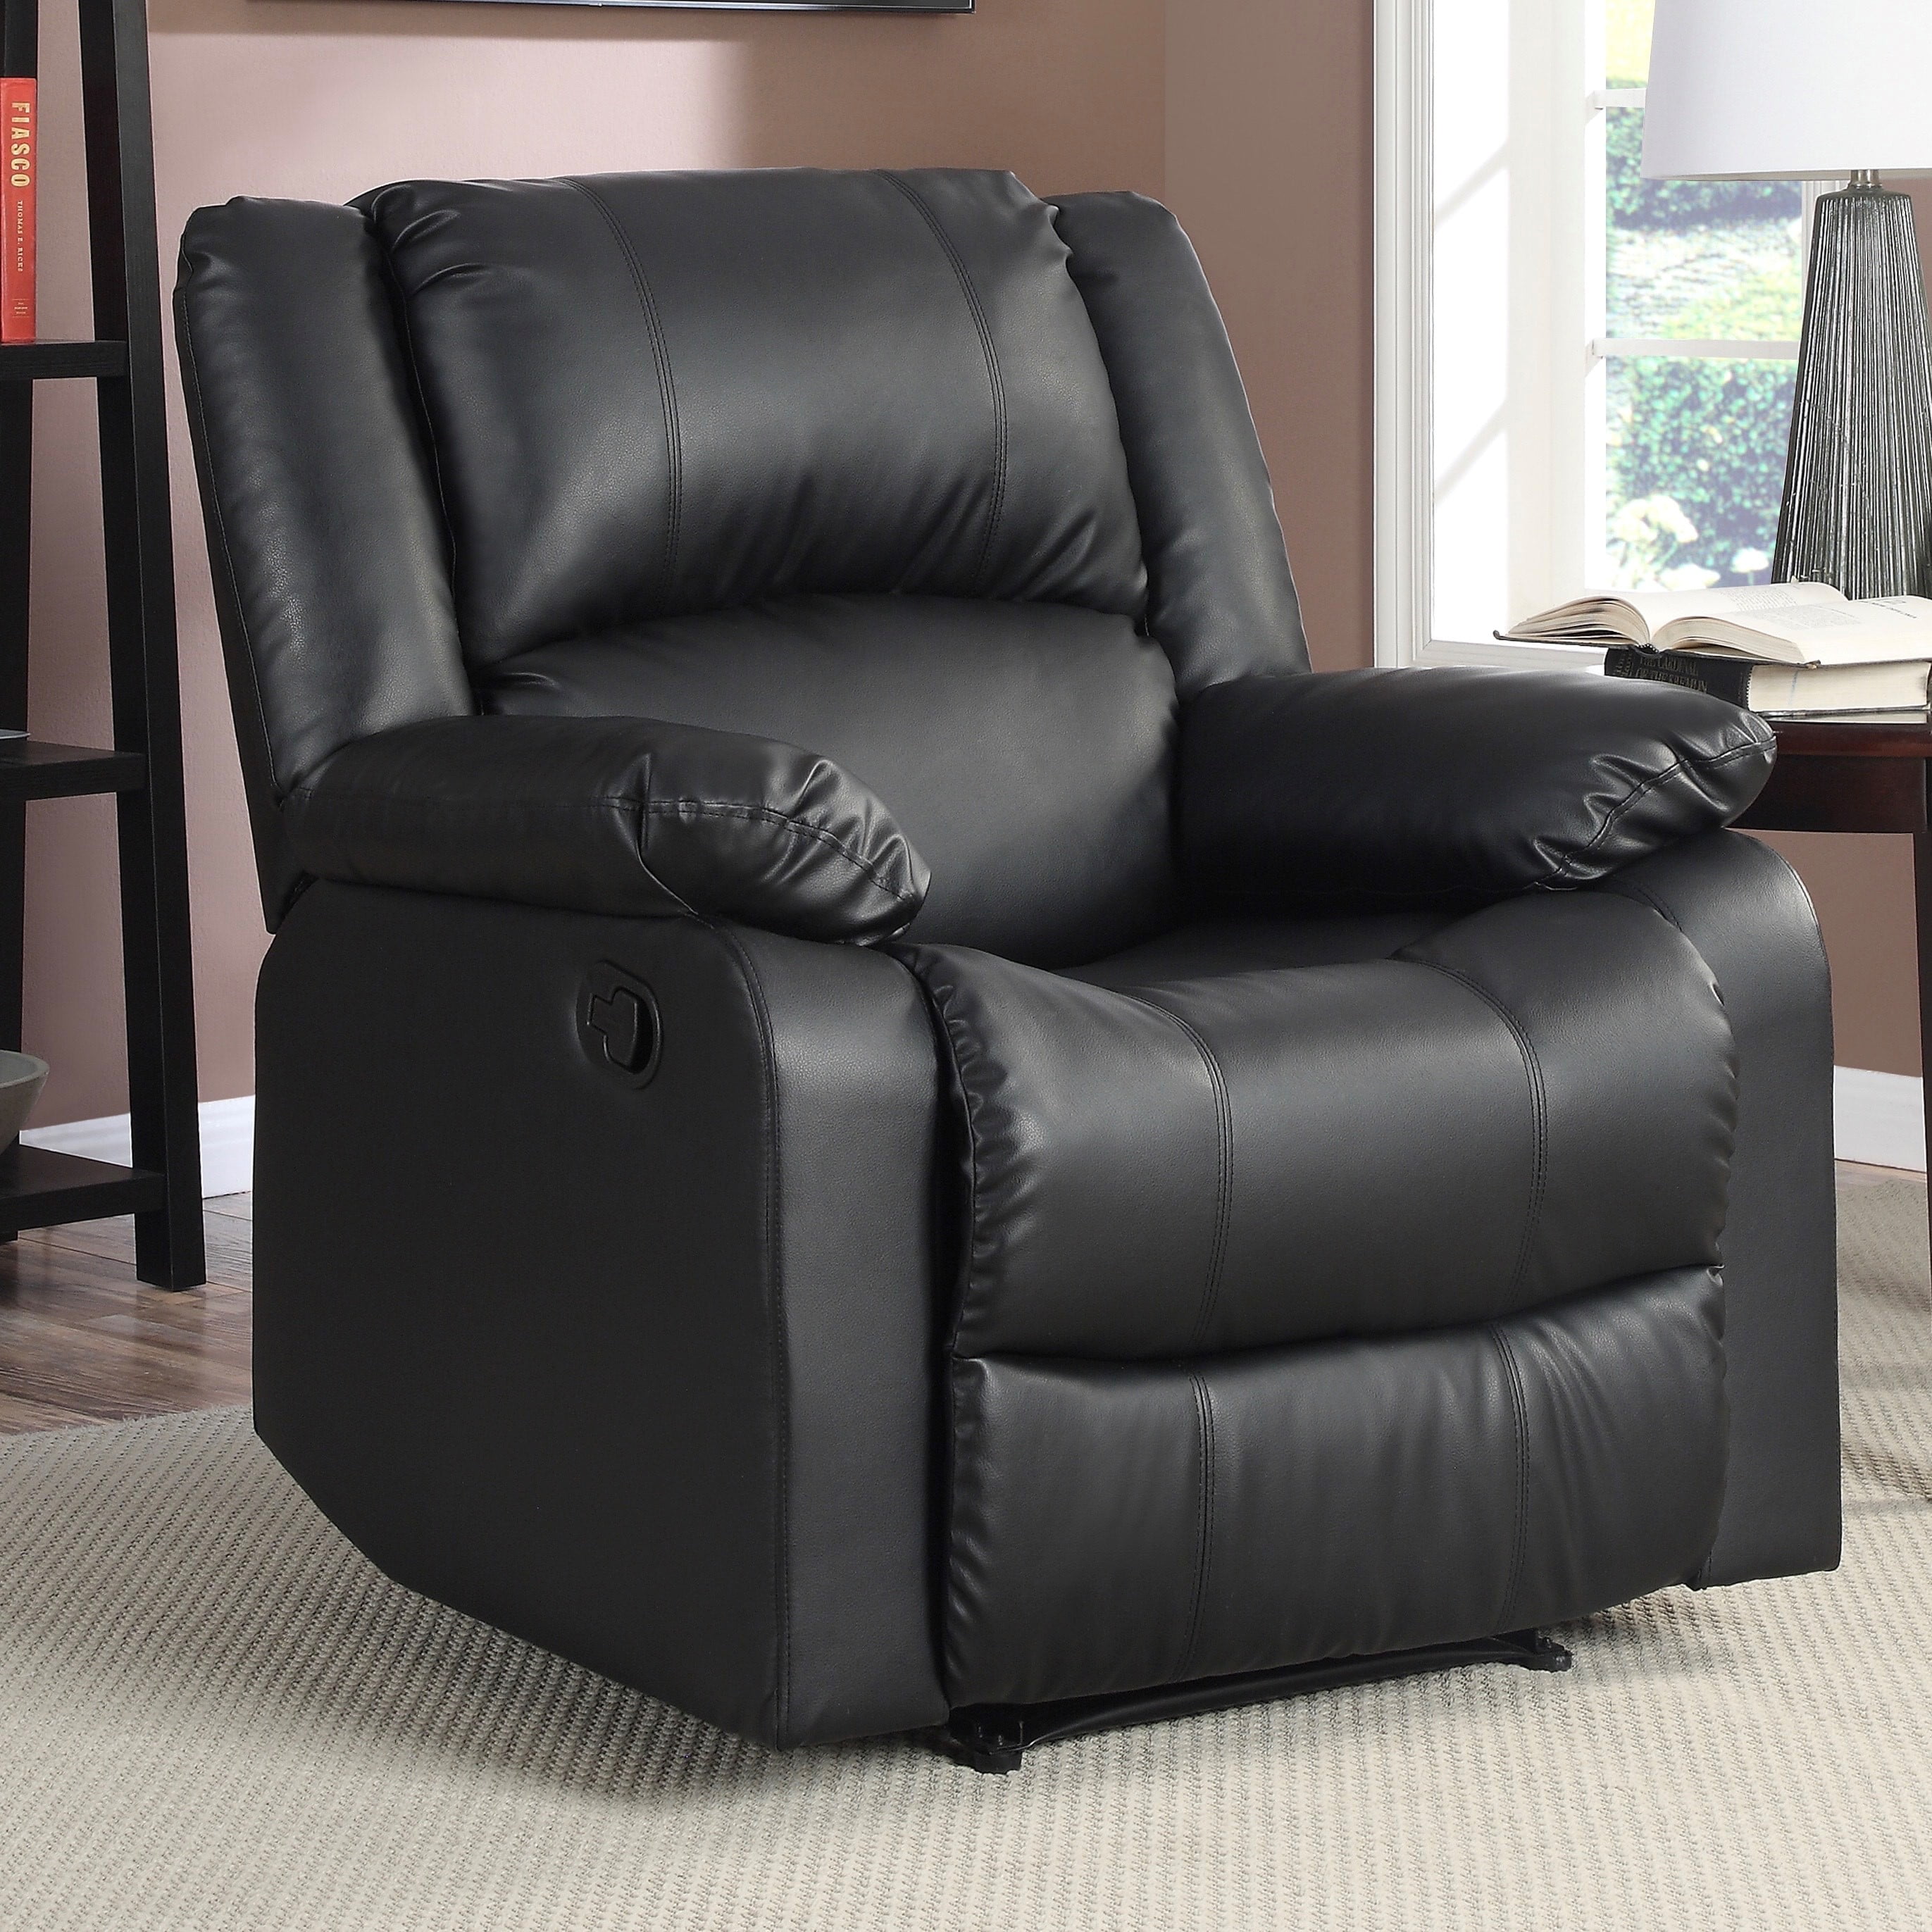 relaxalounger warren standard faux leather push back recliner black   walmart